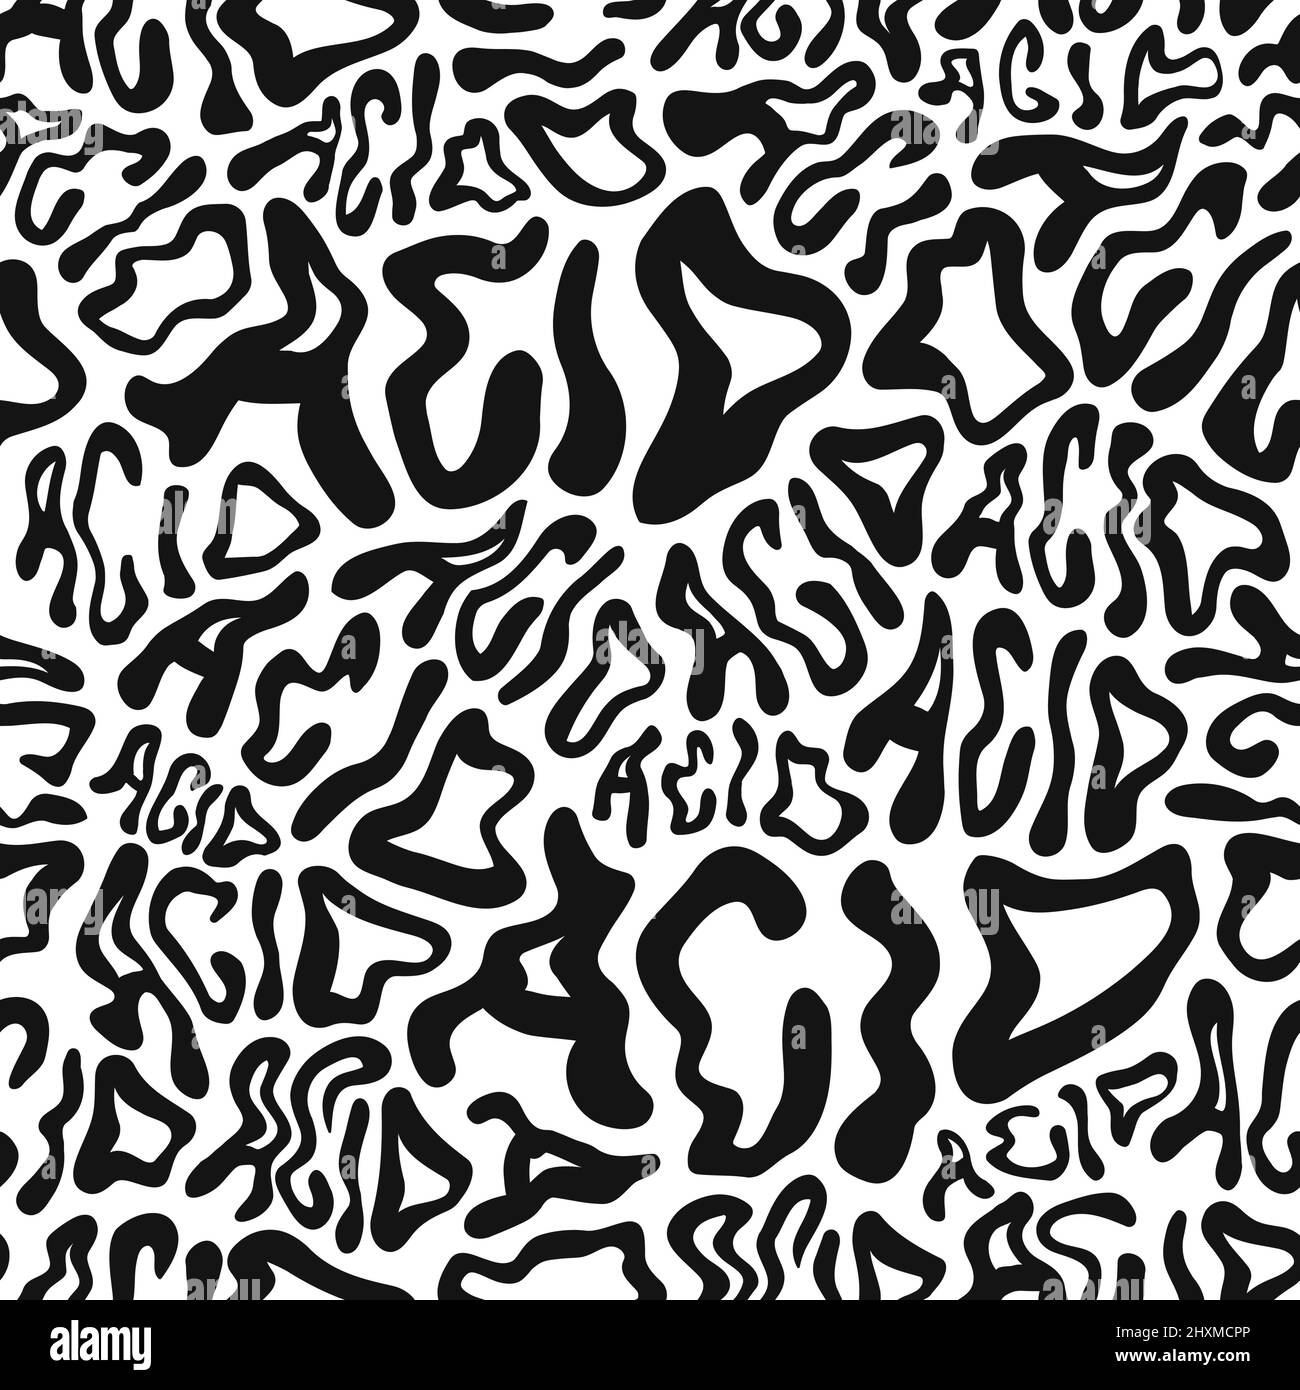 Deformata wavy acid word senza giunture pattern wallpaper.Vector graphic character Illustration.LSD,surreale,acid,trippy lettering senza giunture pattern wallpaper print concept Illustrazione Vettoriale